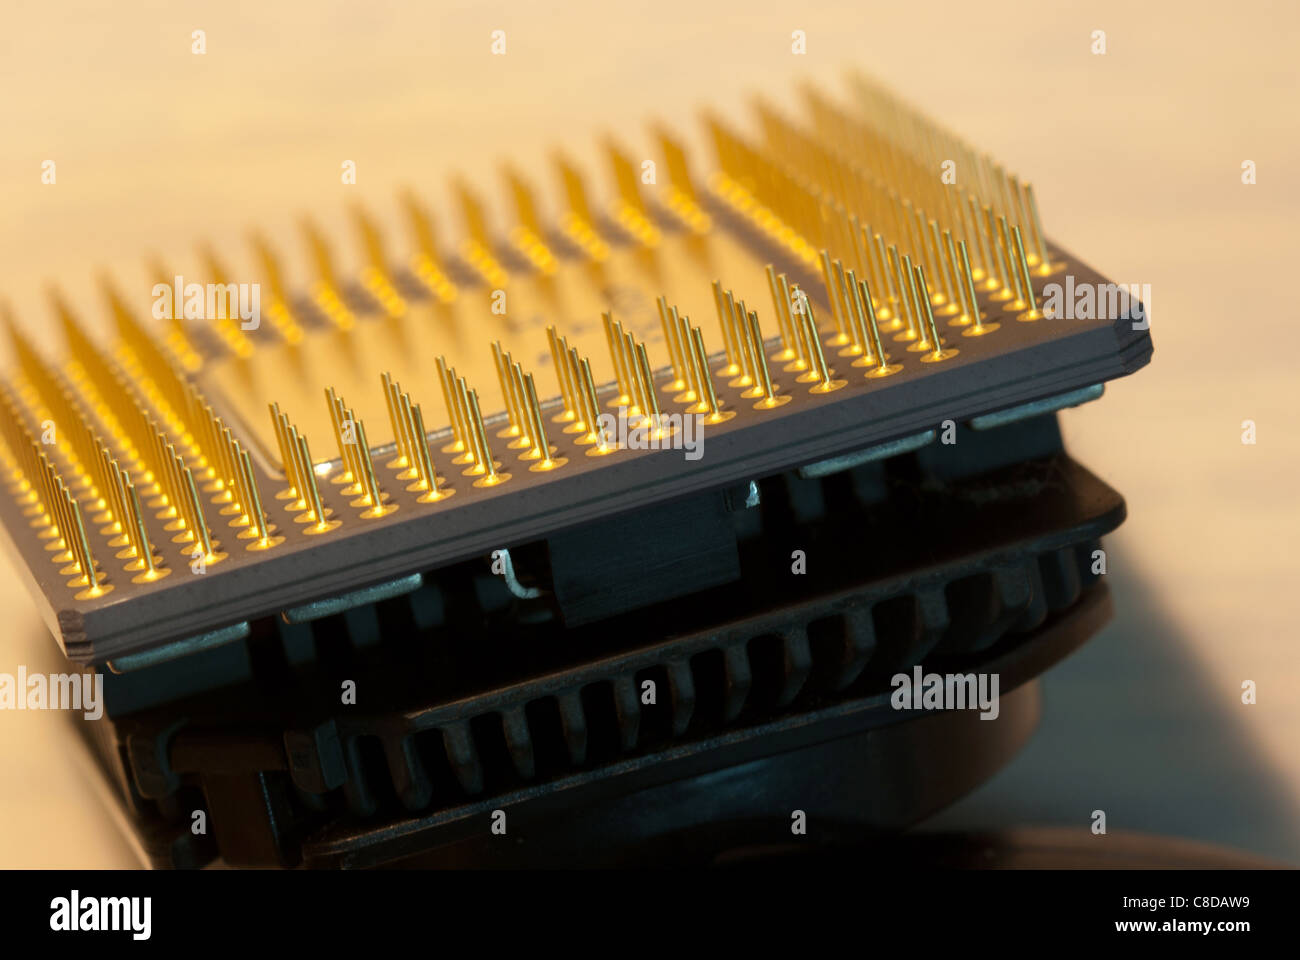 Intel Pentium overdrive microprocessor close up Stock Photo